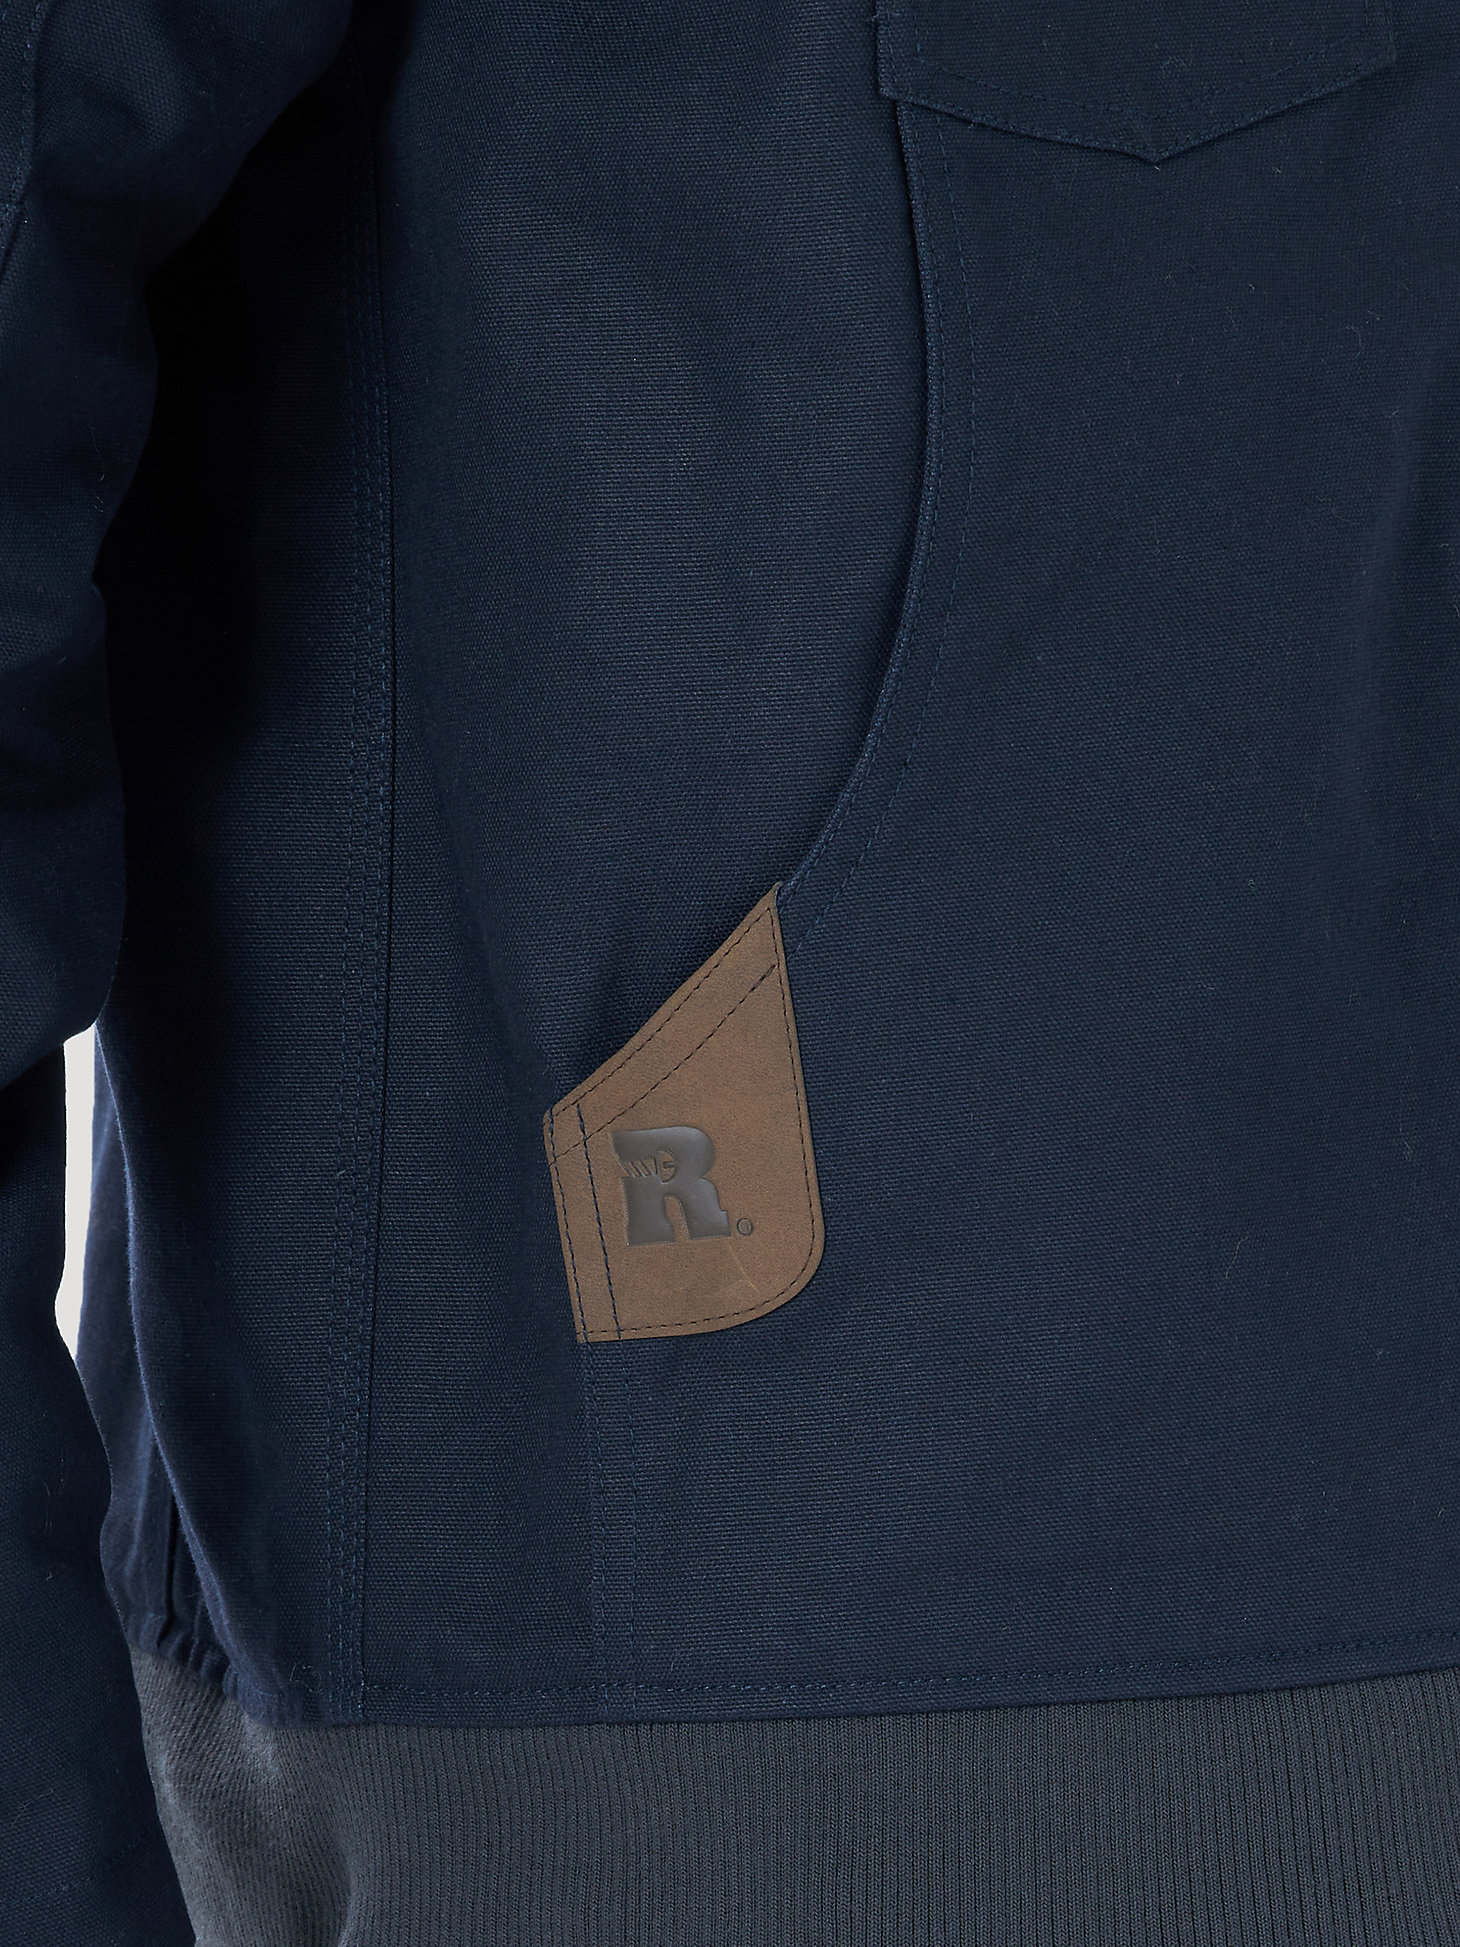 Wrangler® RIGGS Workwear® Tough Layers Insulated Canvas Work Jacket in Dark Navy alternative view 2